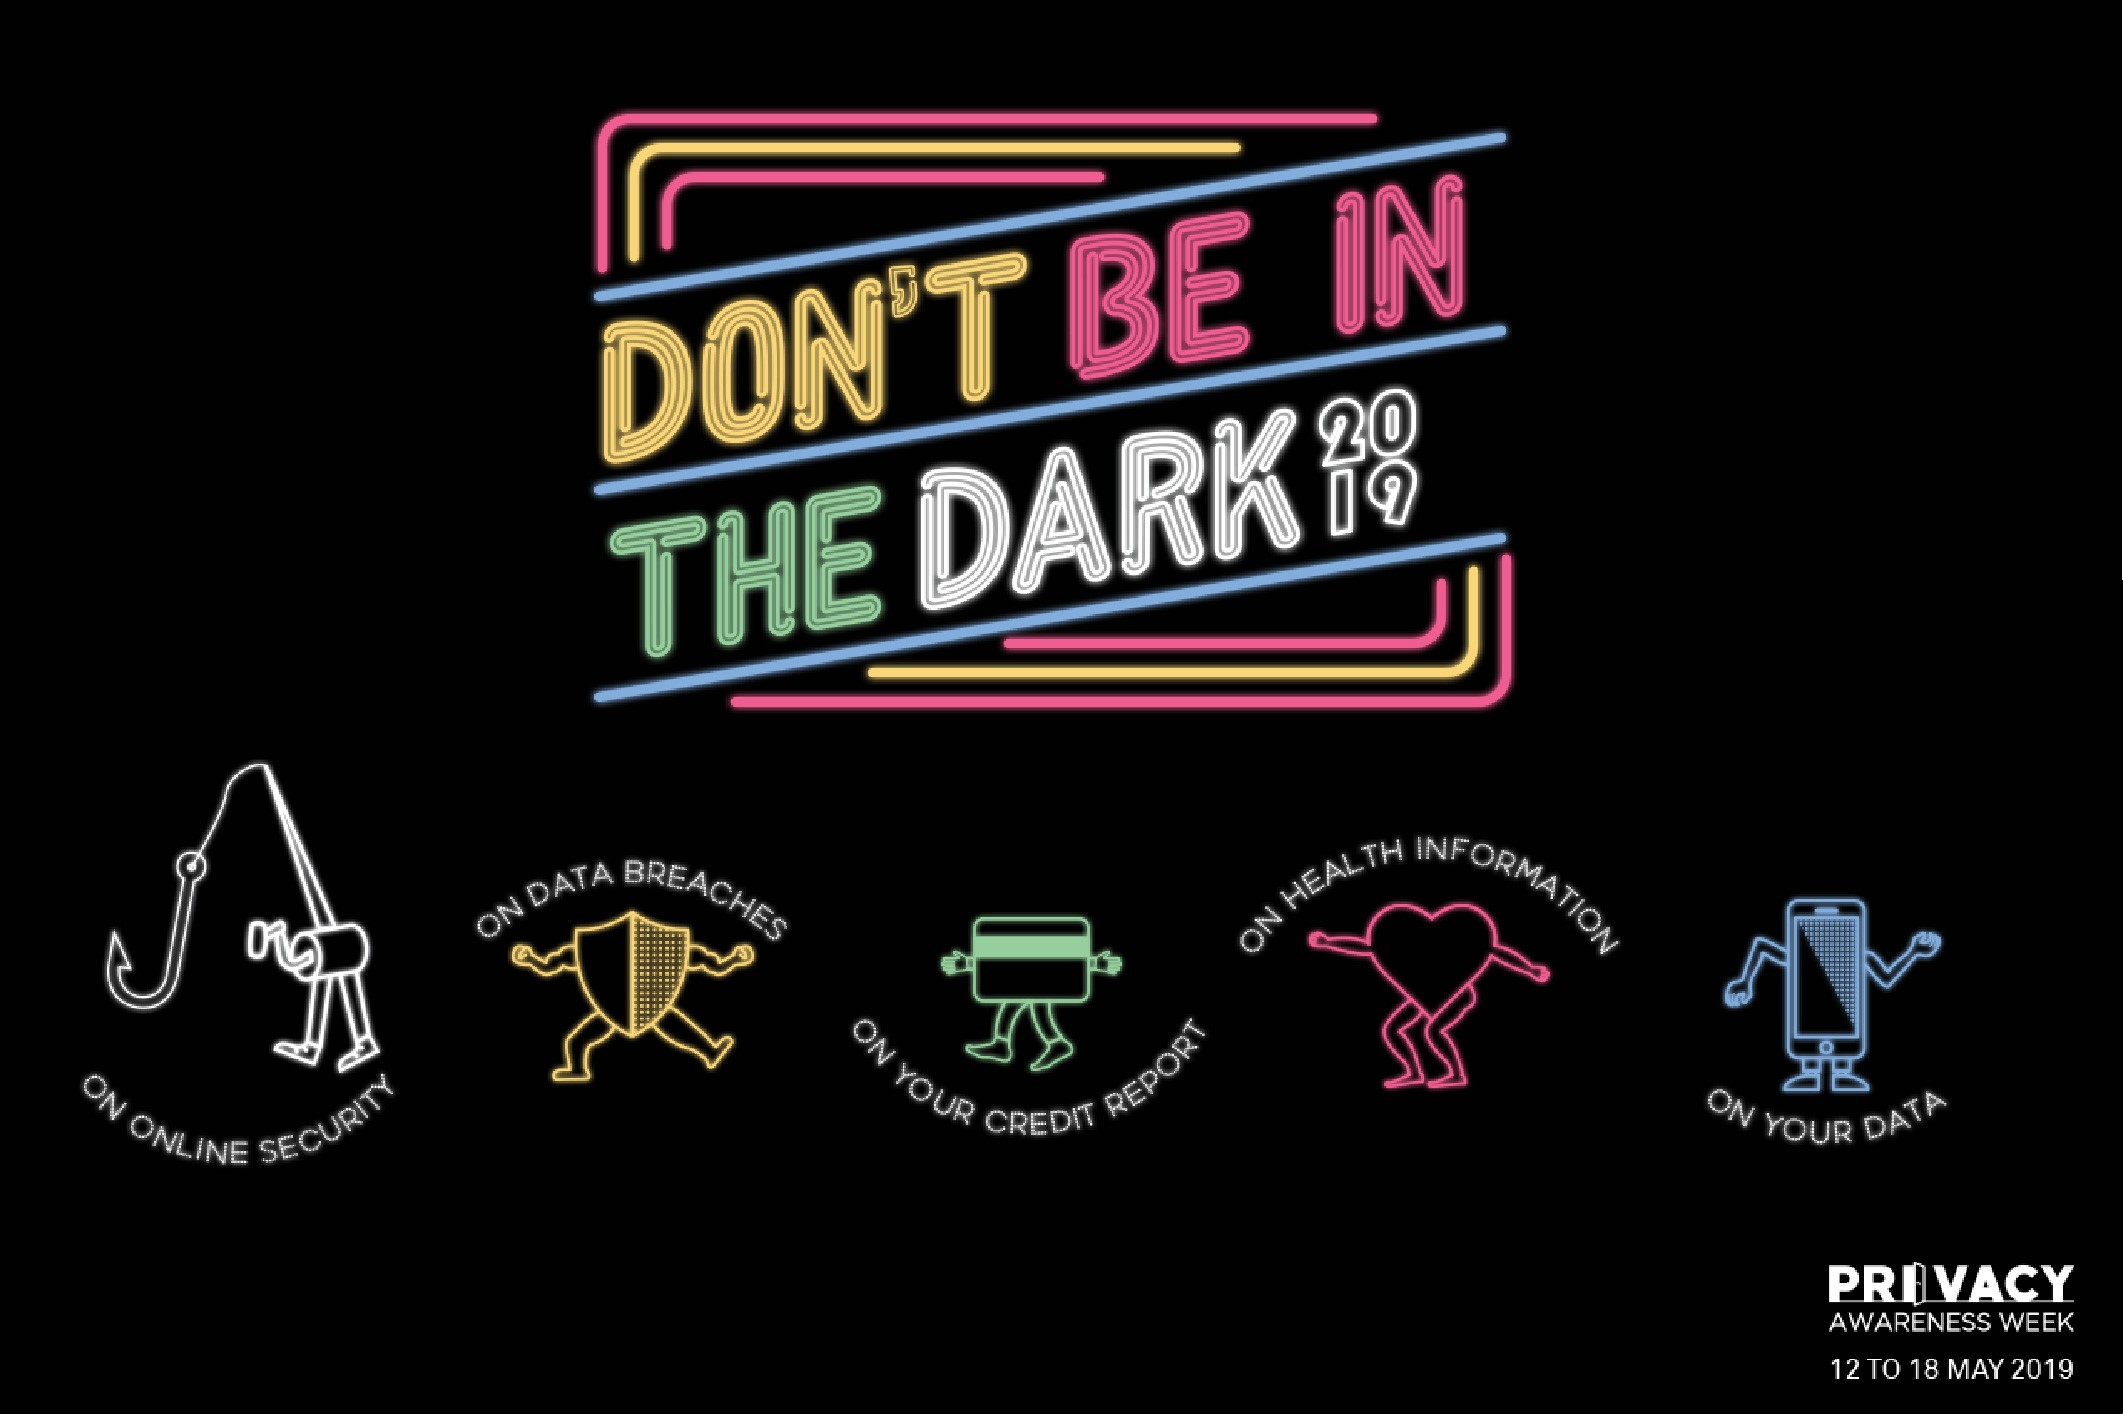 Don't be in the dark 2019 written in illustrative neon lights